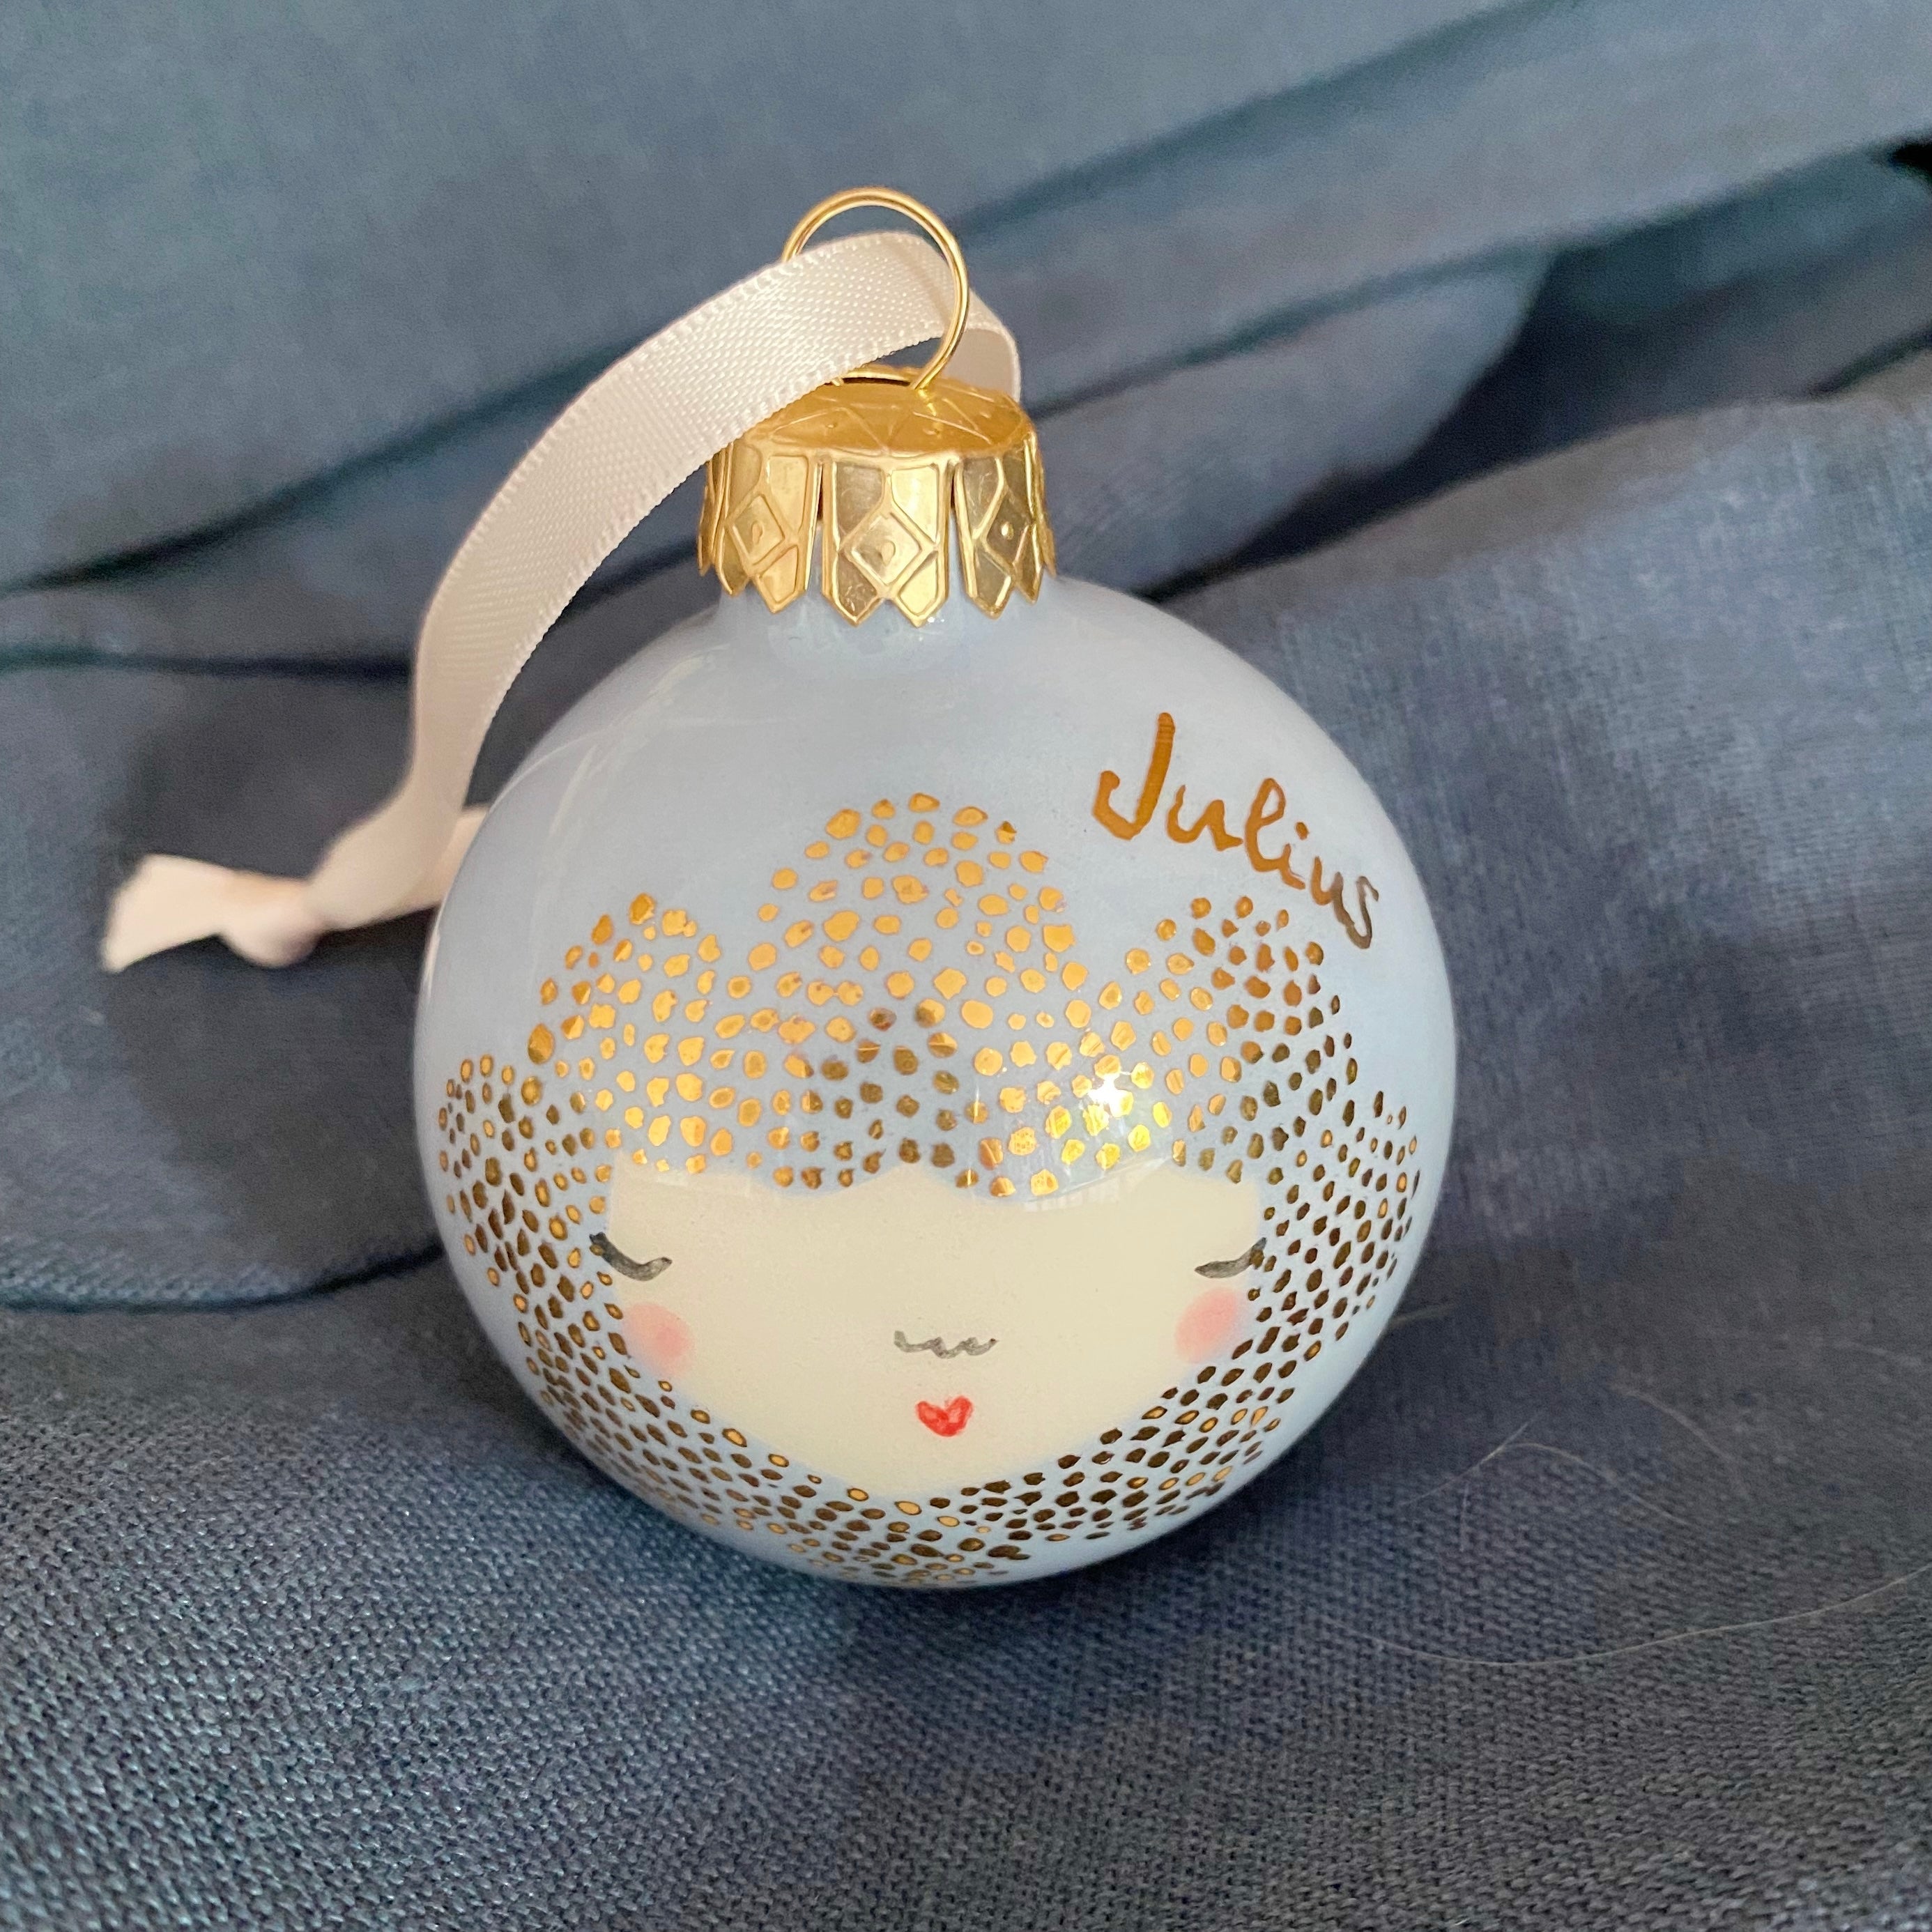 Marinski Heartmades julekugle med navn - lyseblå med guldprikker 'dotty lace'